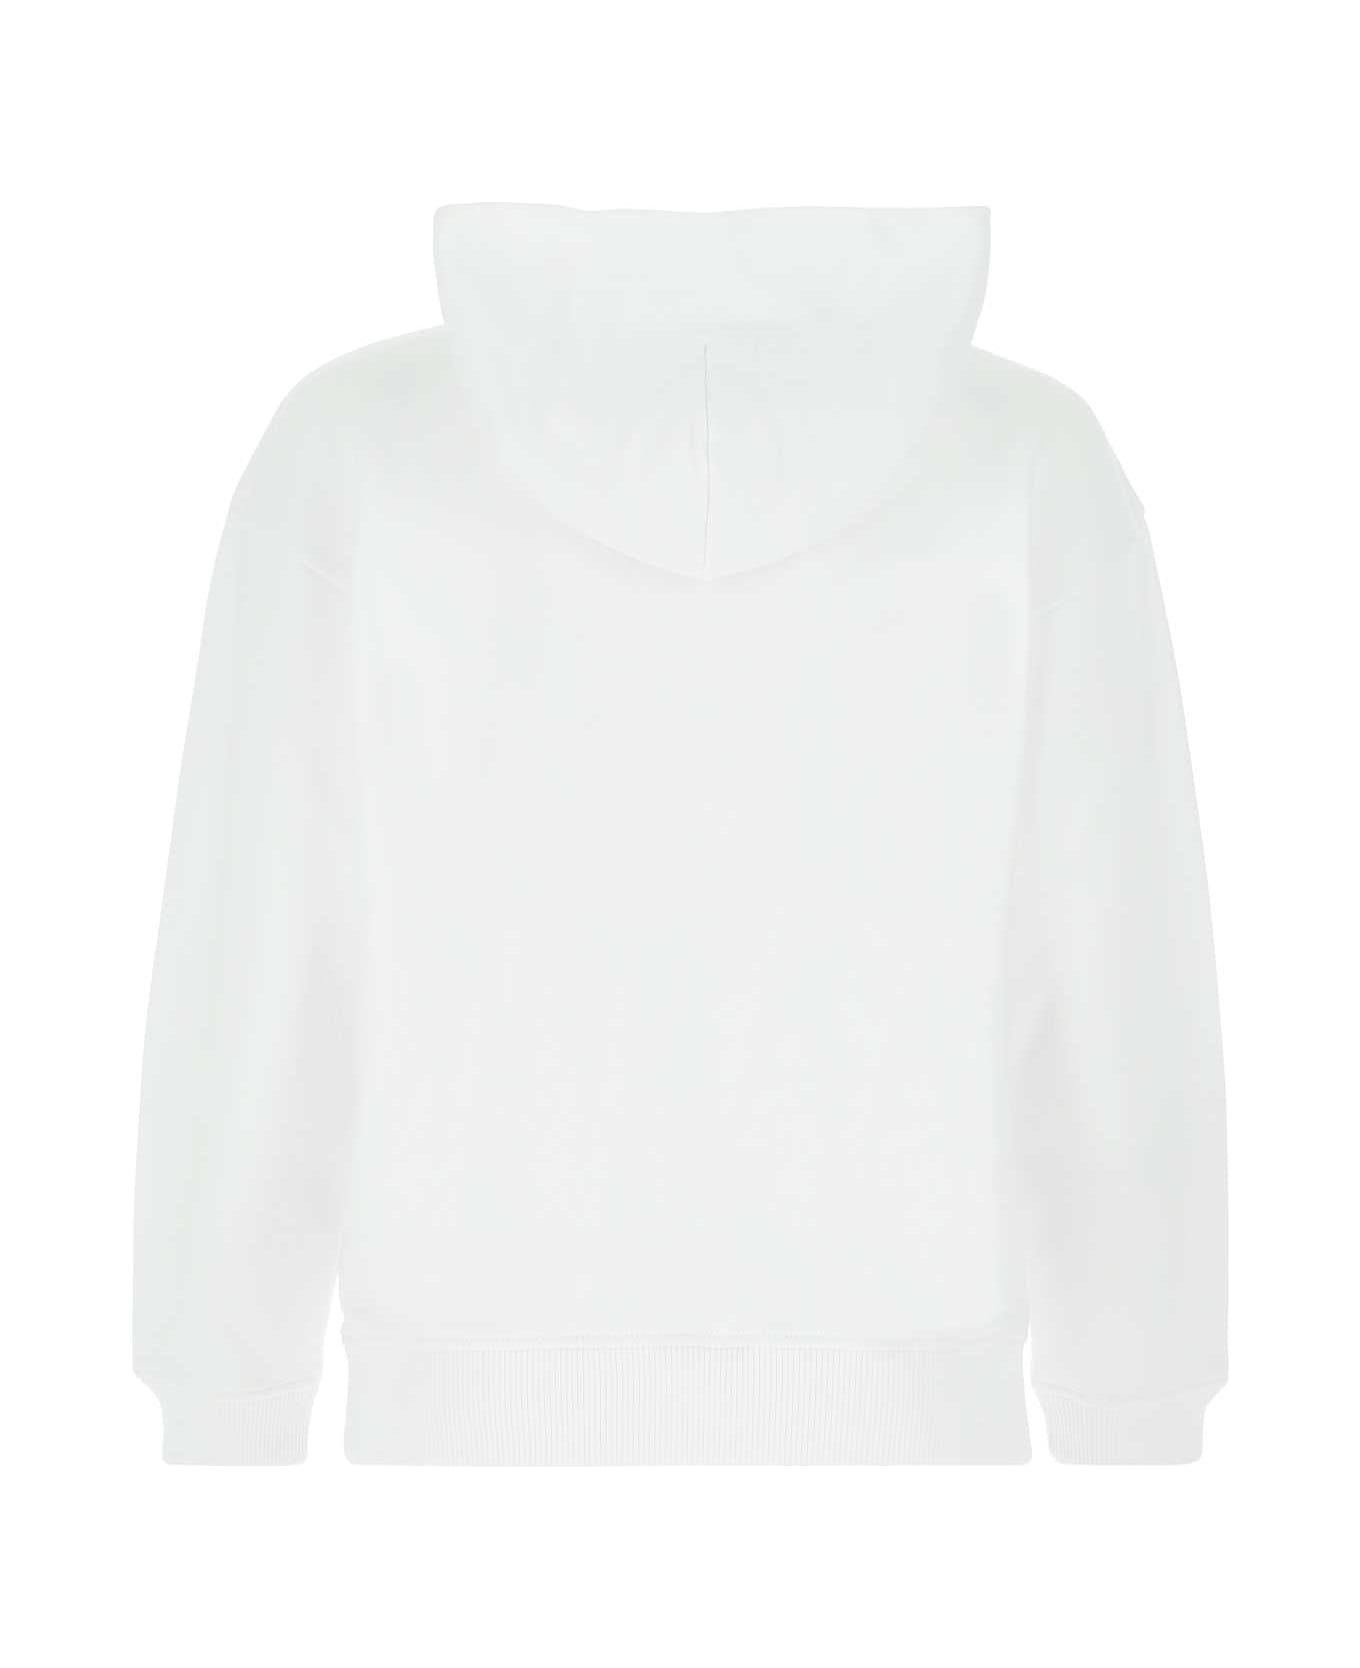 Givenchy White Cotton Oversize T-shirt - 100